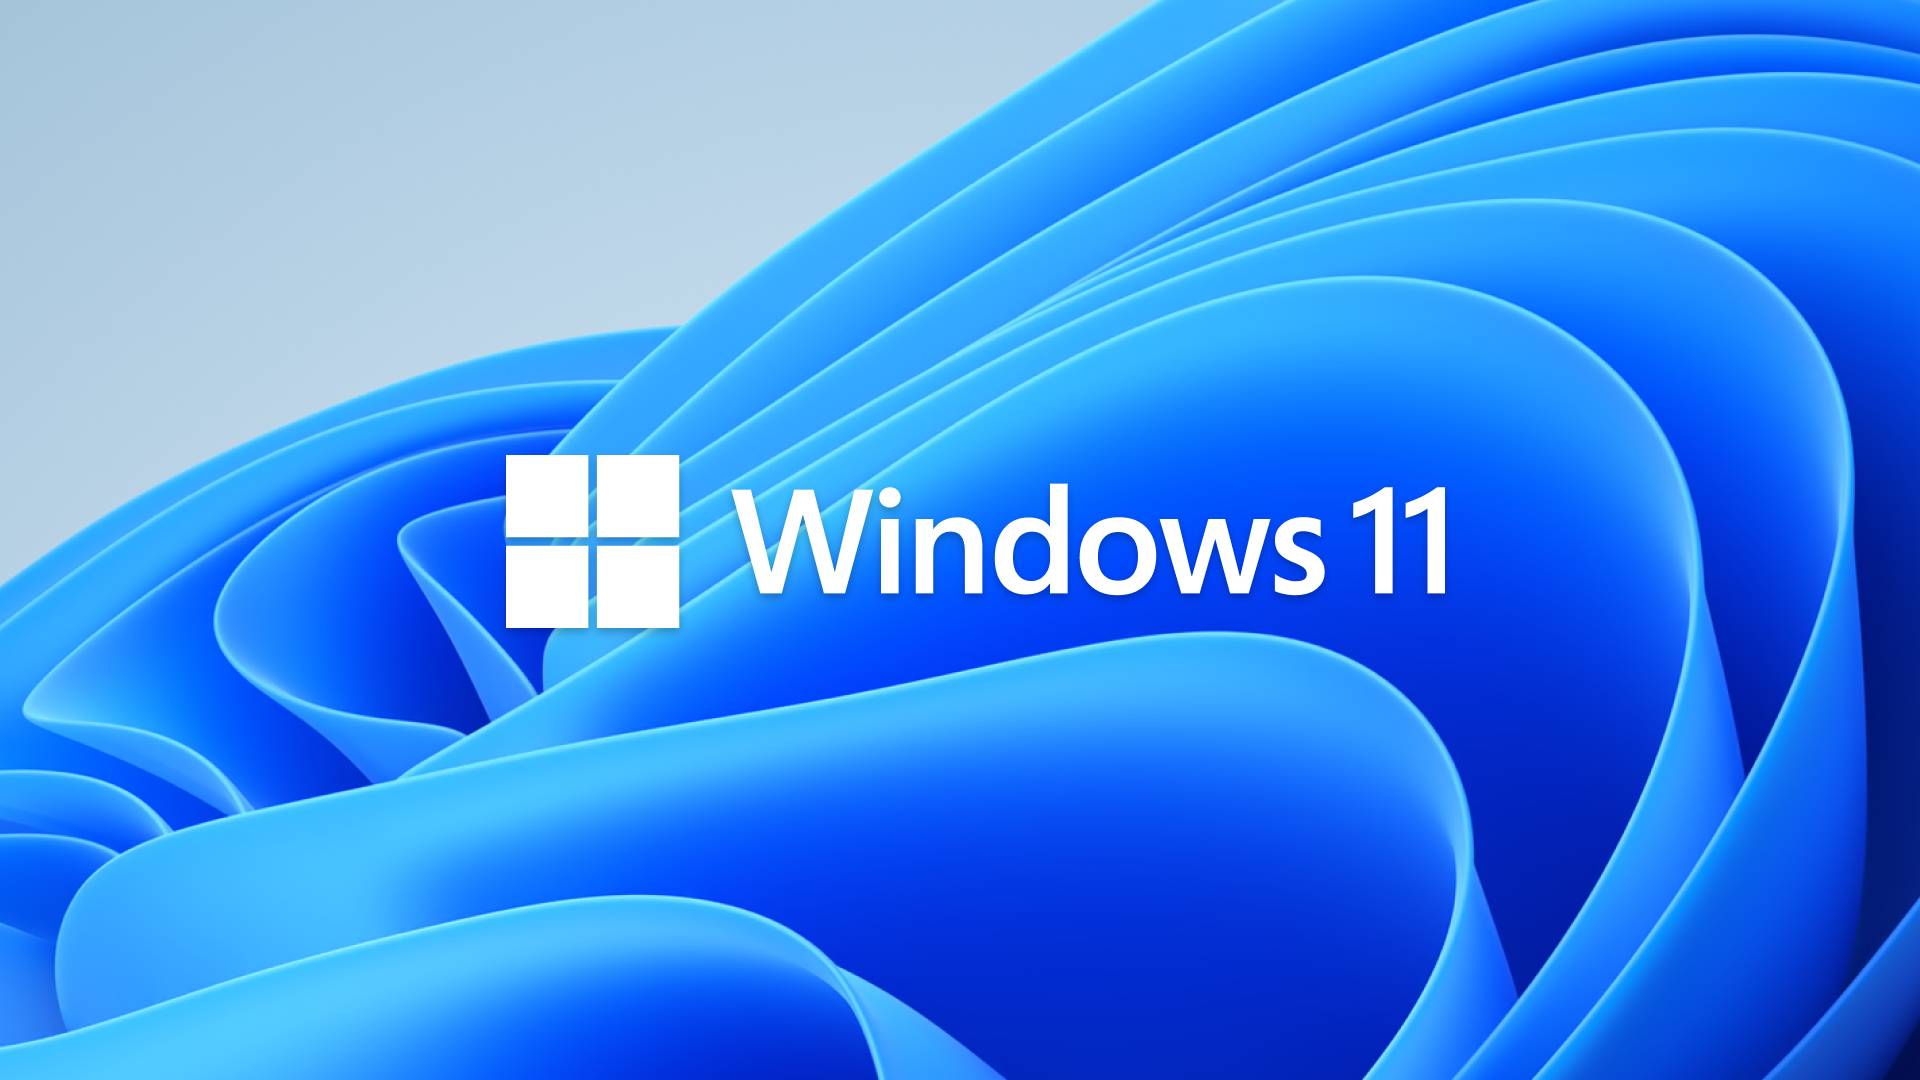 Windows 11 ny version SPECIAL Microsoft officiel lancering